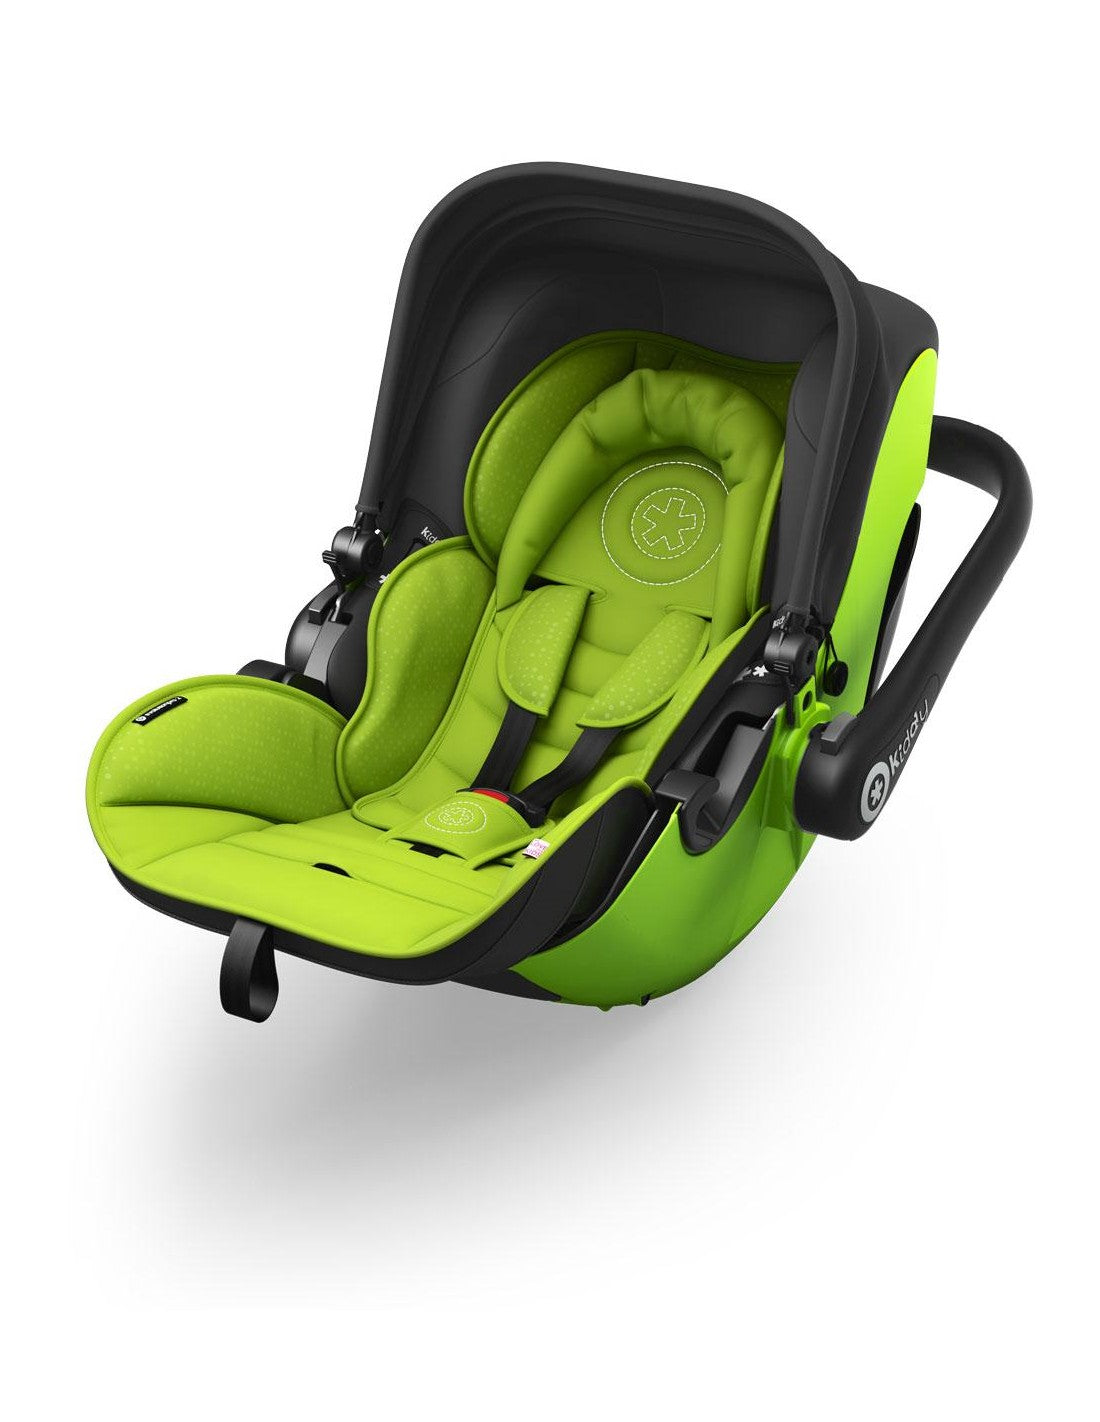 Kiddy Evolution Pro 2 Car Seat-Green EX-DISPLAY